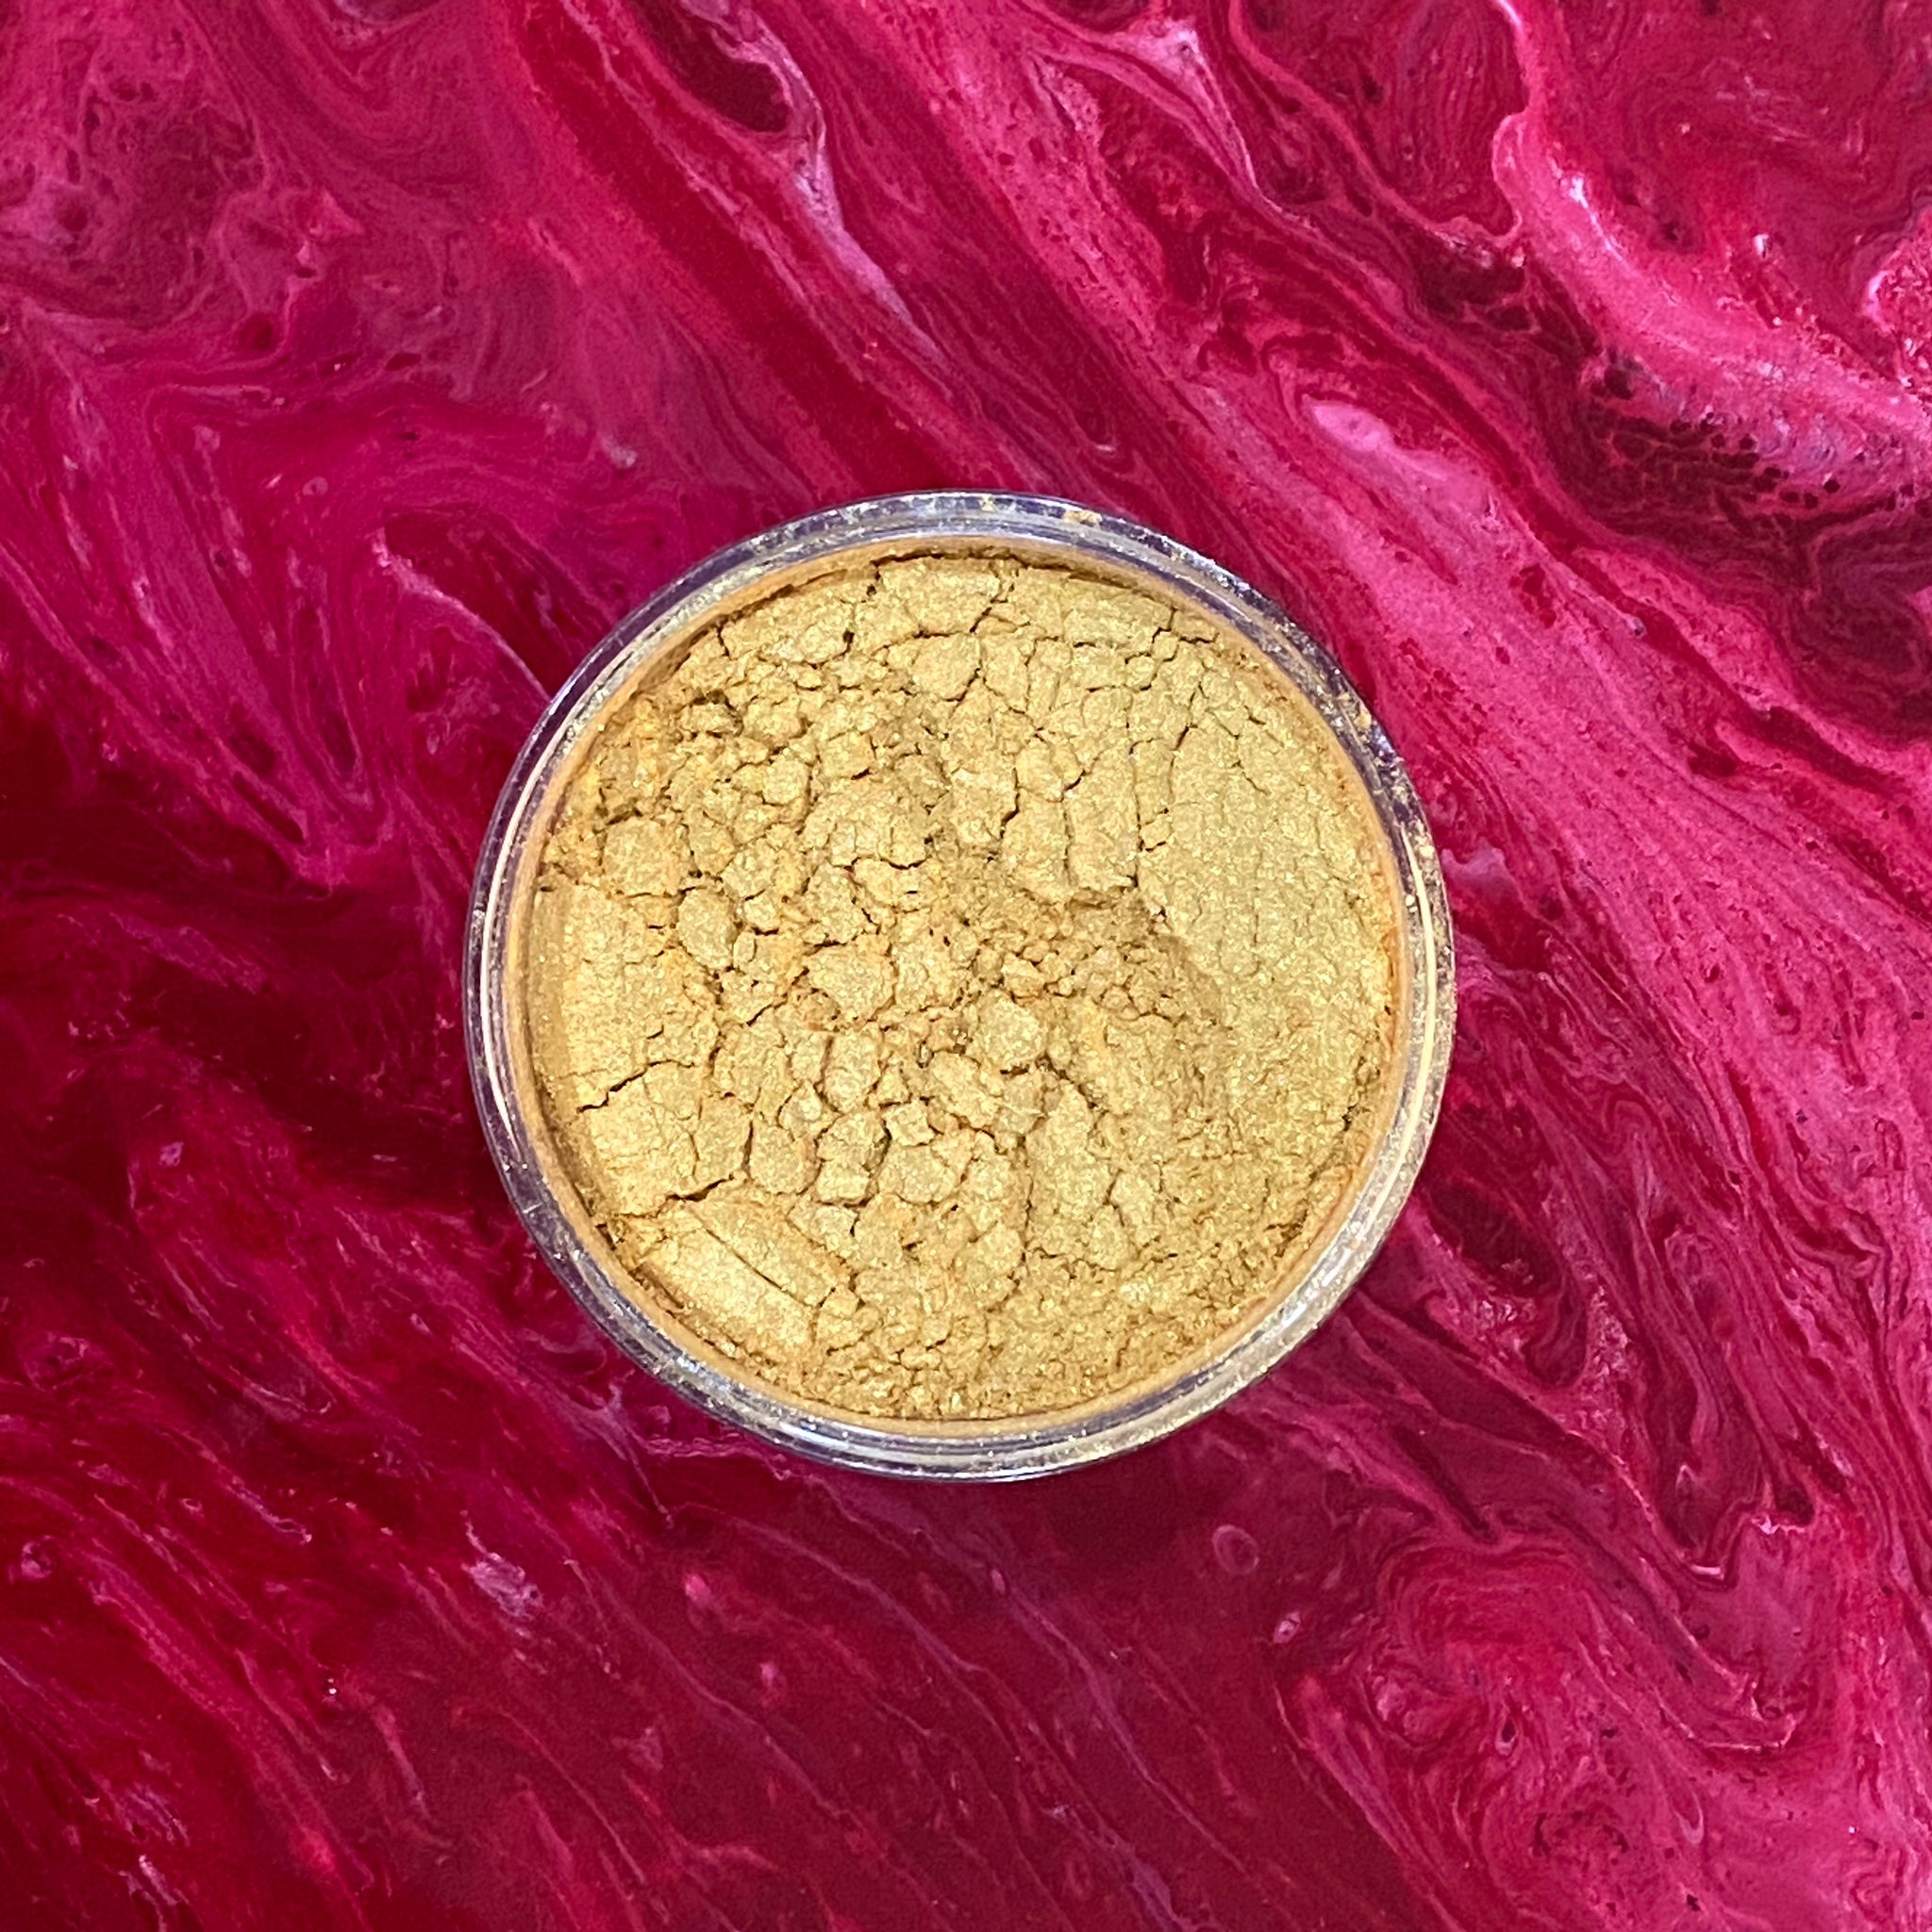 Lit Gold (Metallic pigment powder) - 25gm